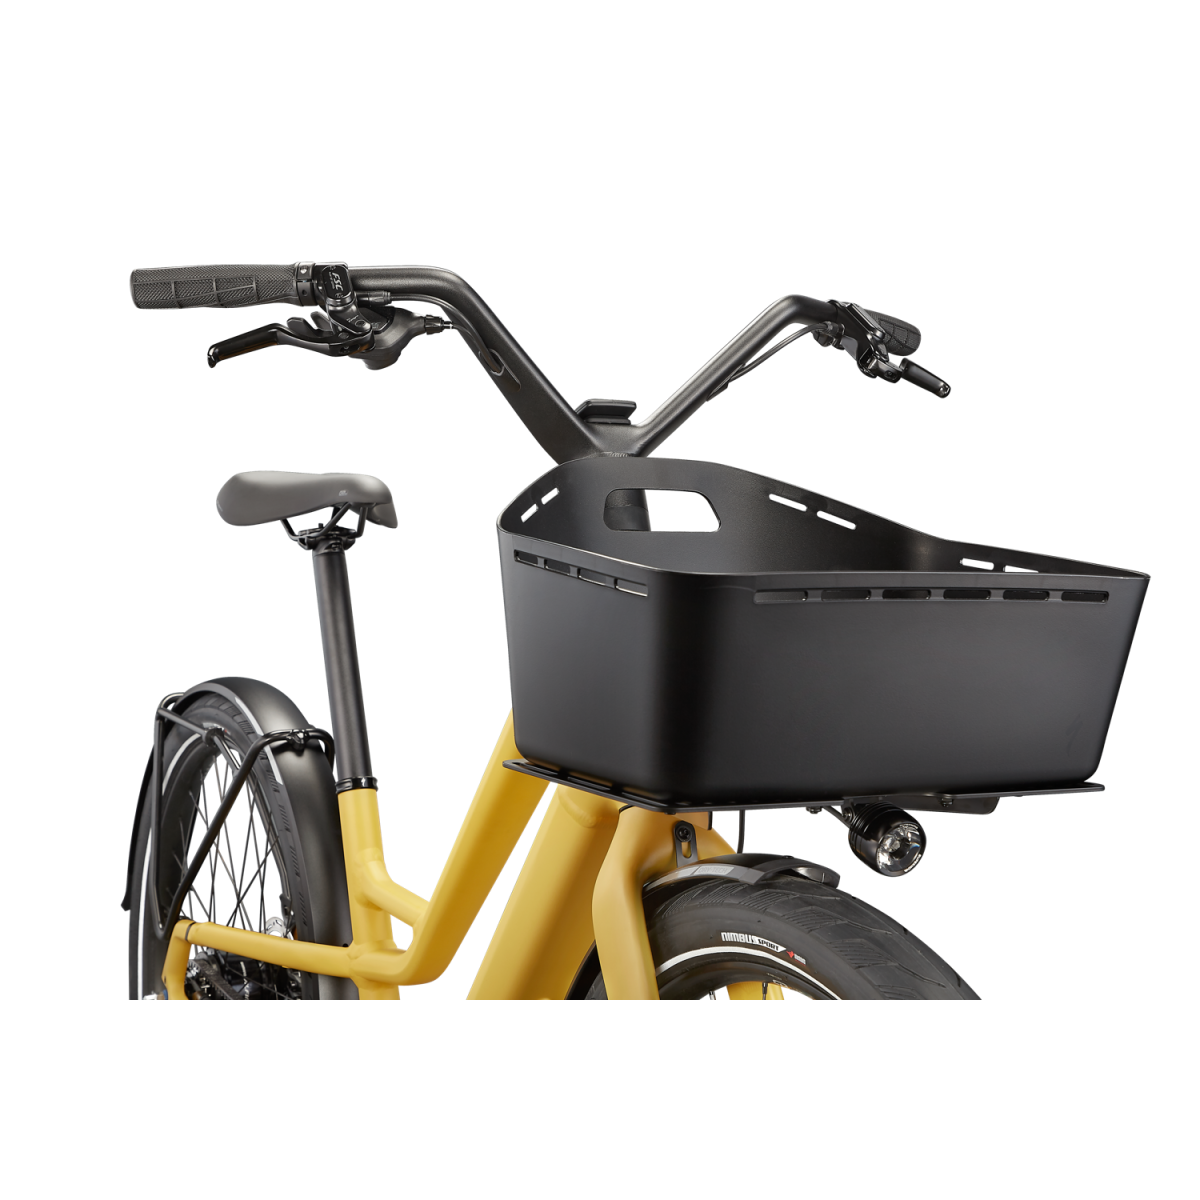 Specialized Turbo Como SL 5.0  elektrinis dviratis / Brassy Yellow - Transparent